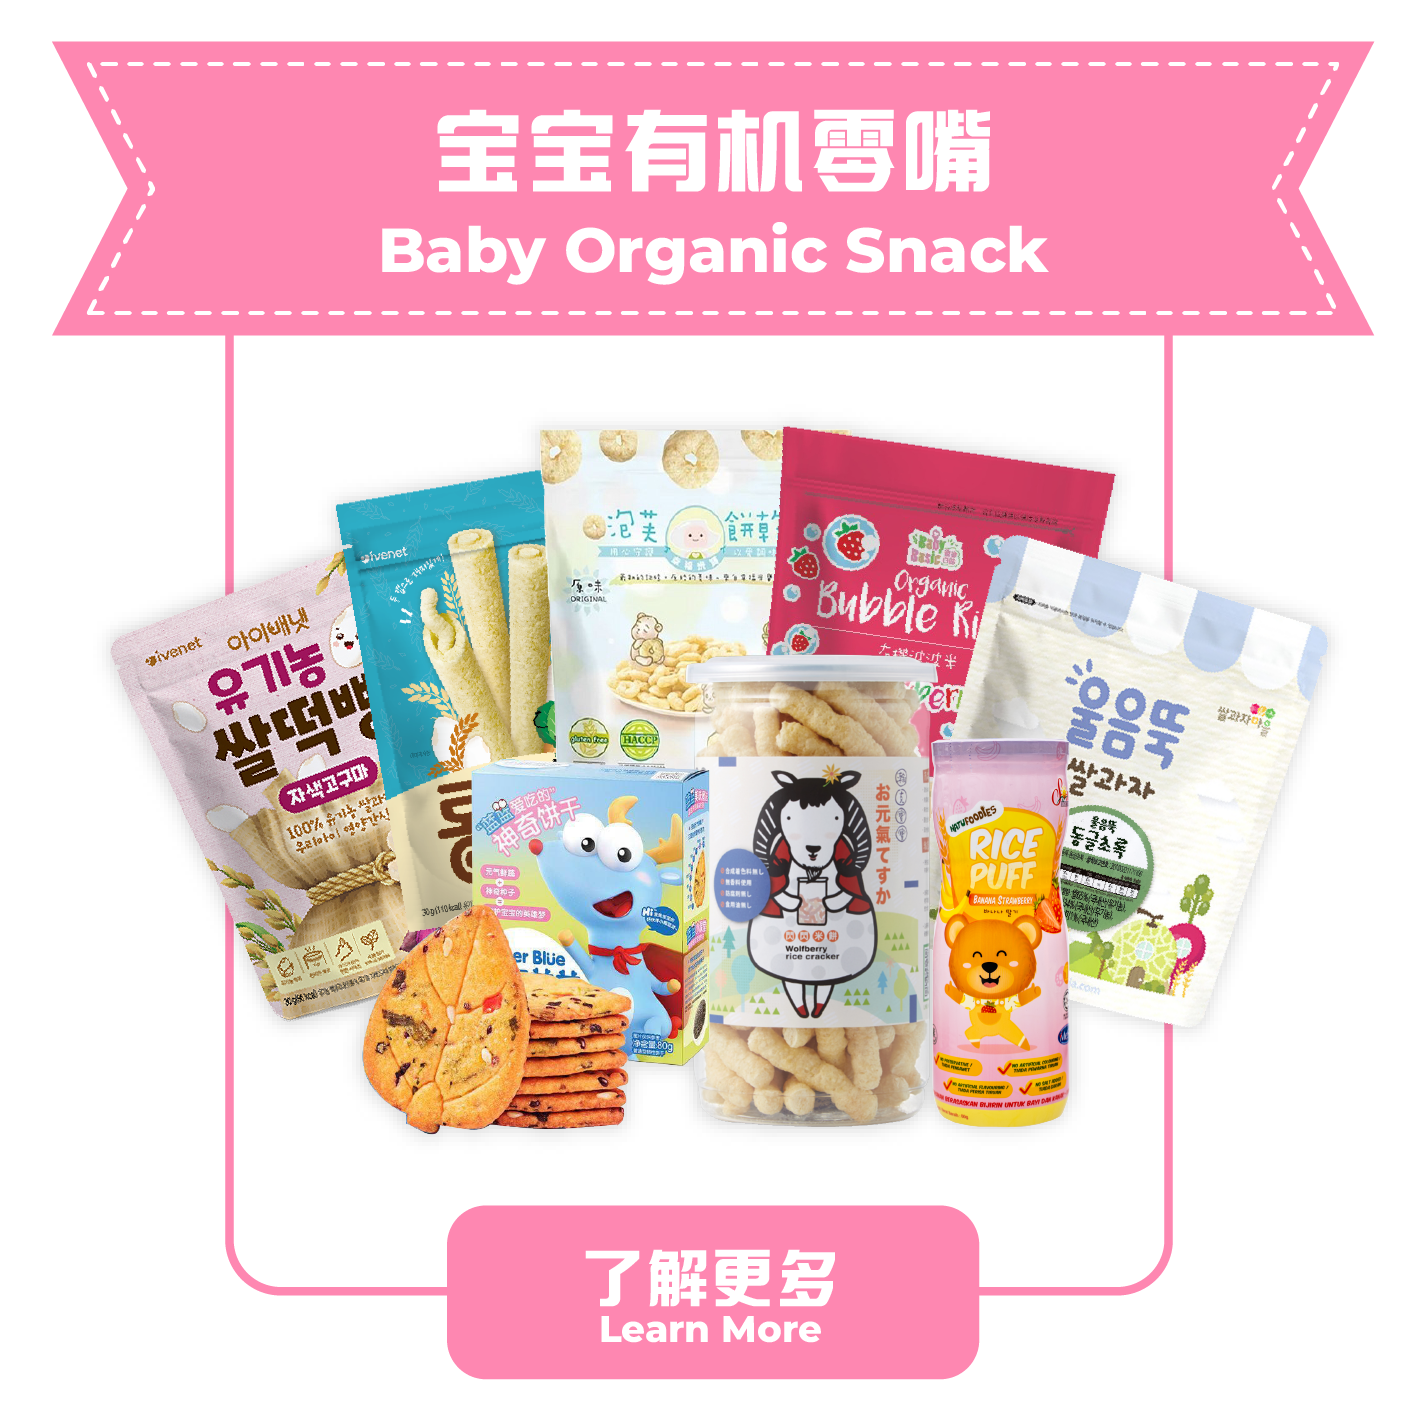 Baby Organic Snack